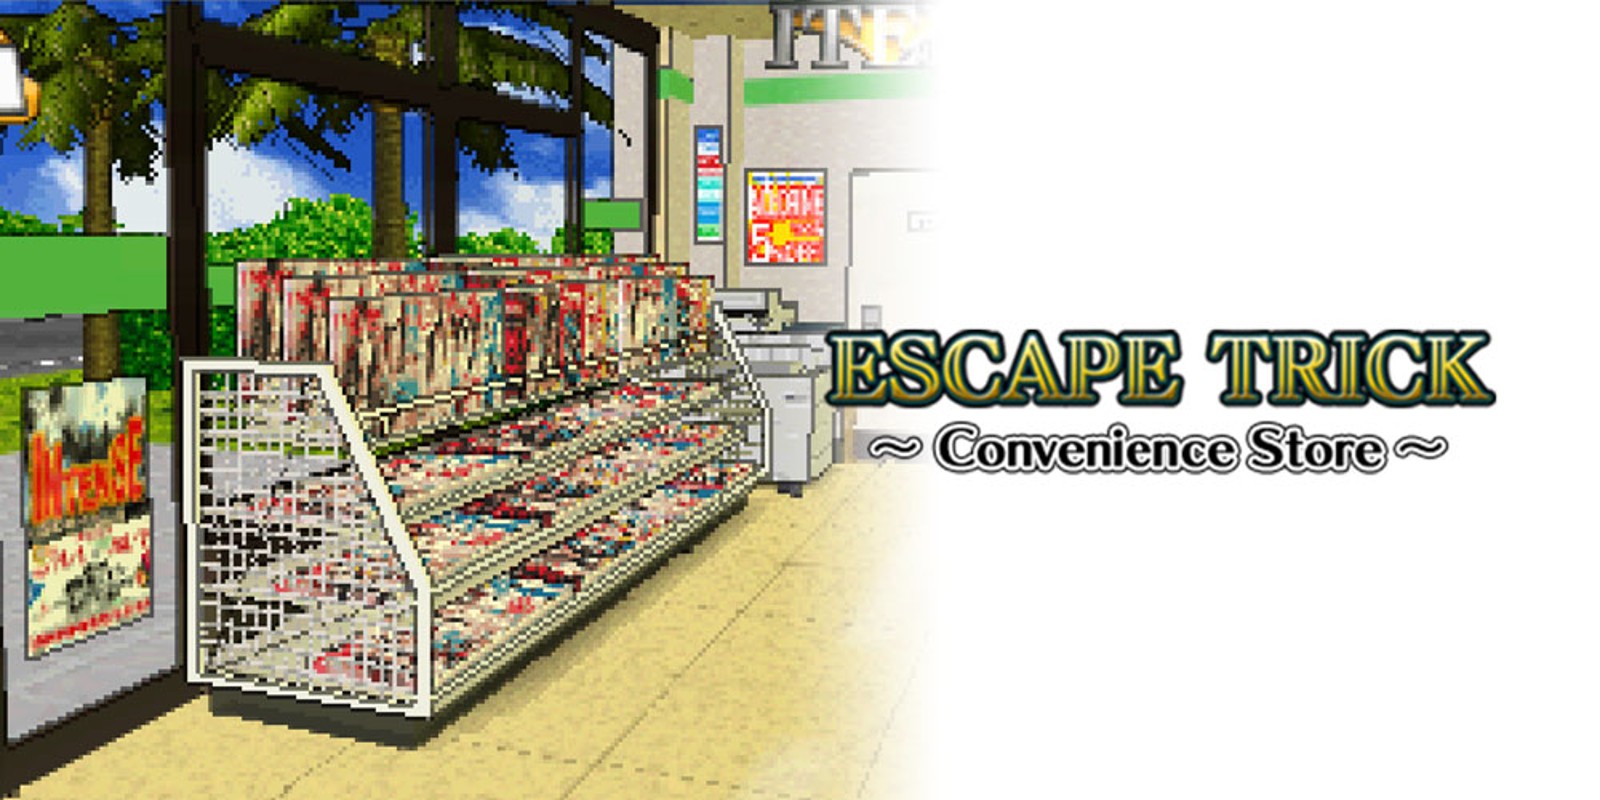 GO Series: Escape Trick Convenience Store